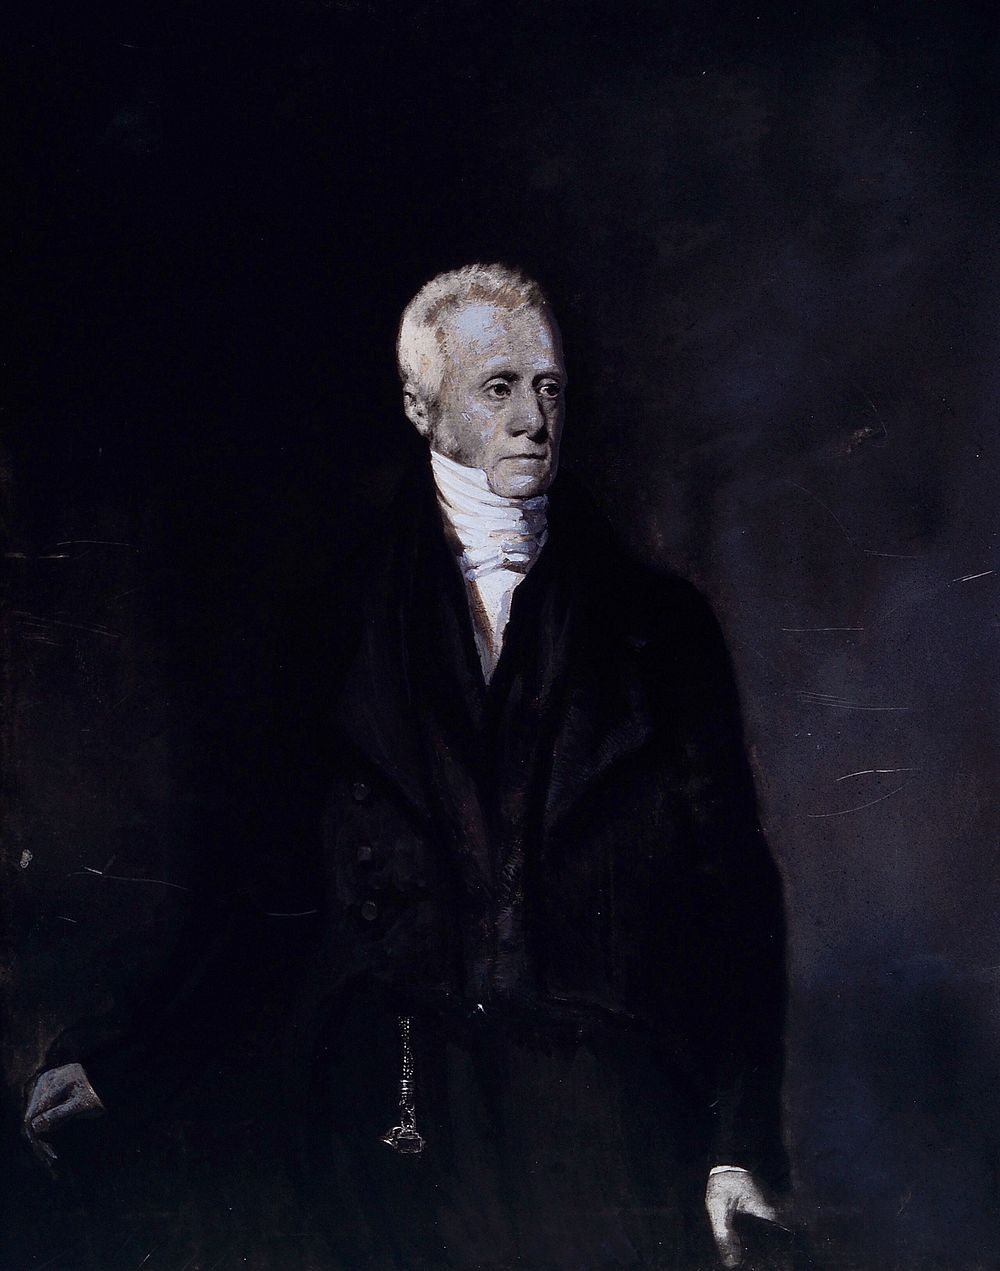 Robert Dyce. Photograph after a painting.